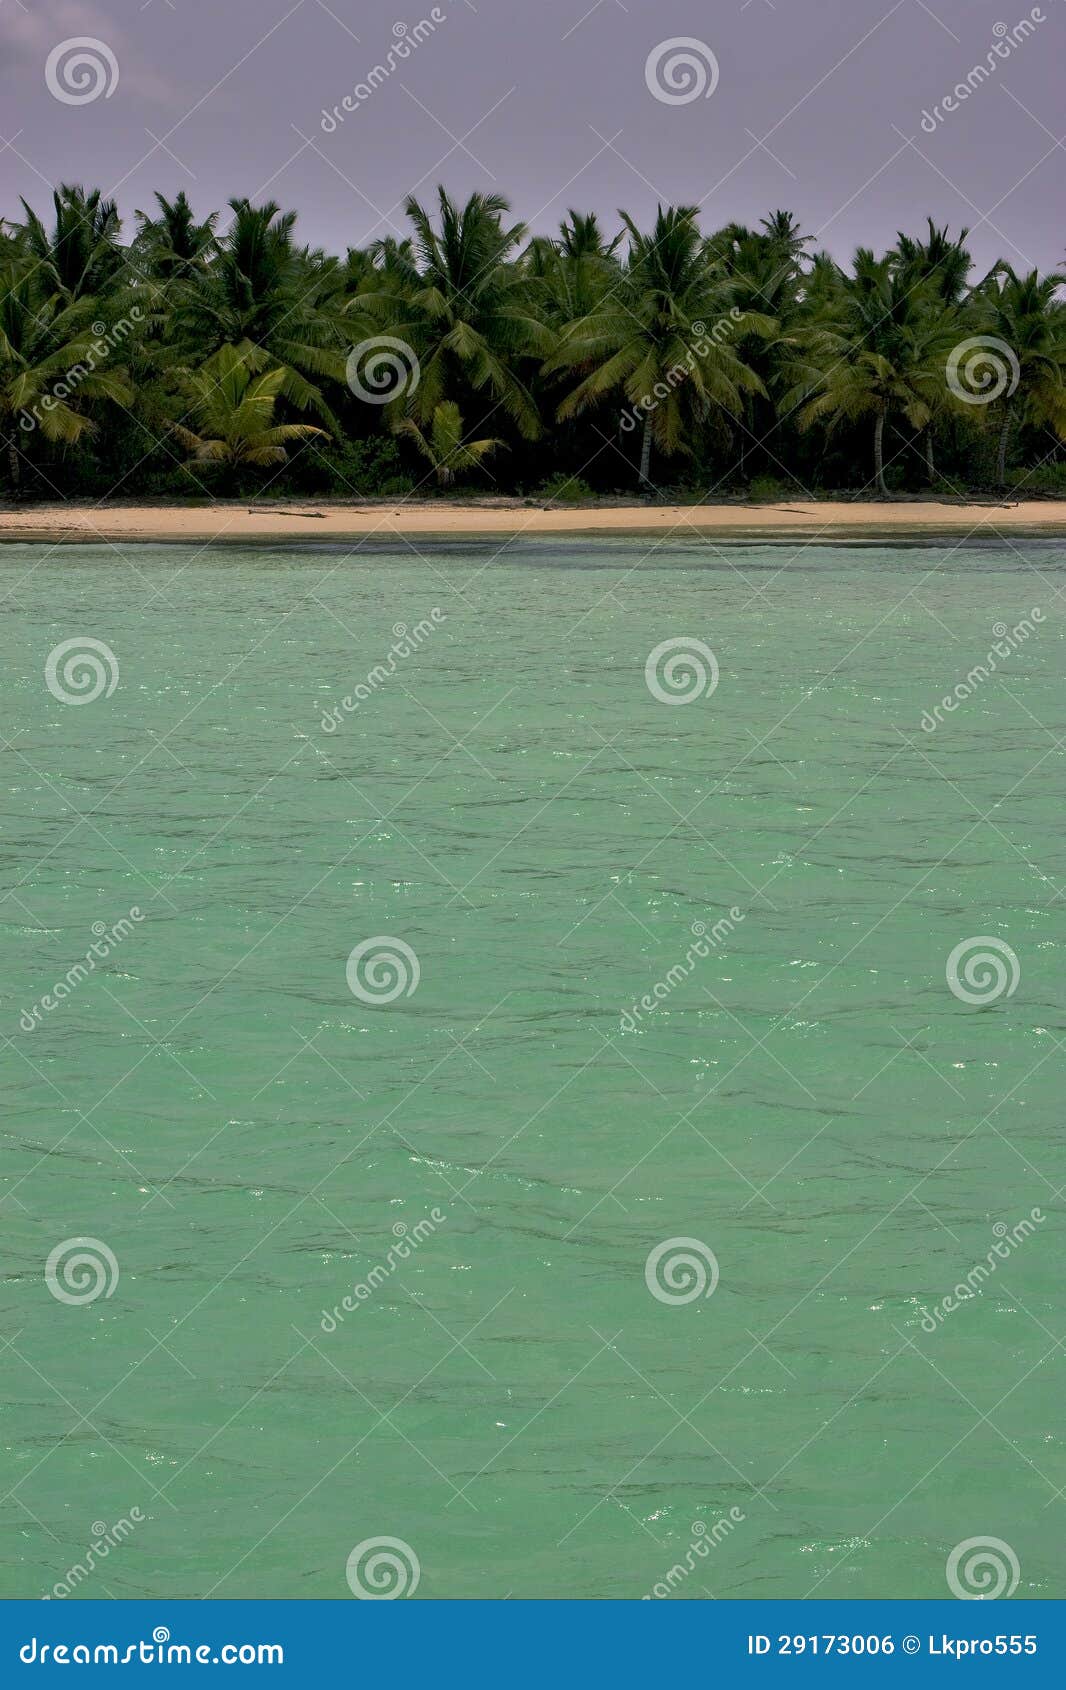 coastline and tree in dominicana